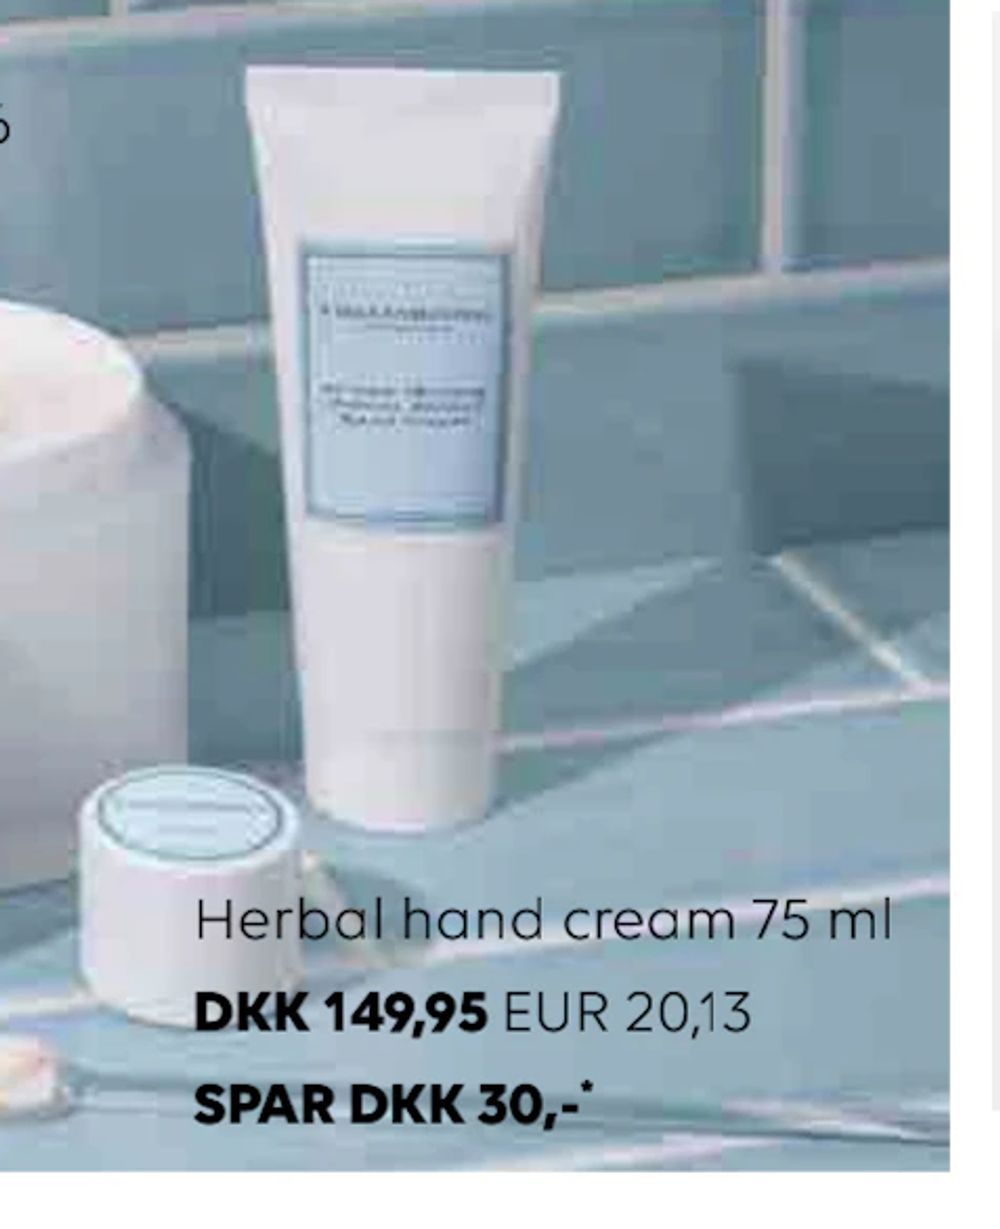 Tilbud på Herbal hand cream 75 ml fra Scandlines Travel Shop til 149,95 kr.